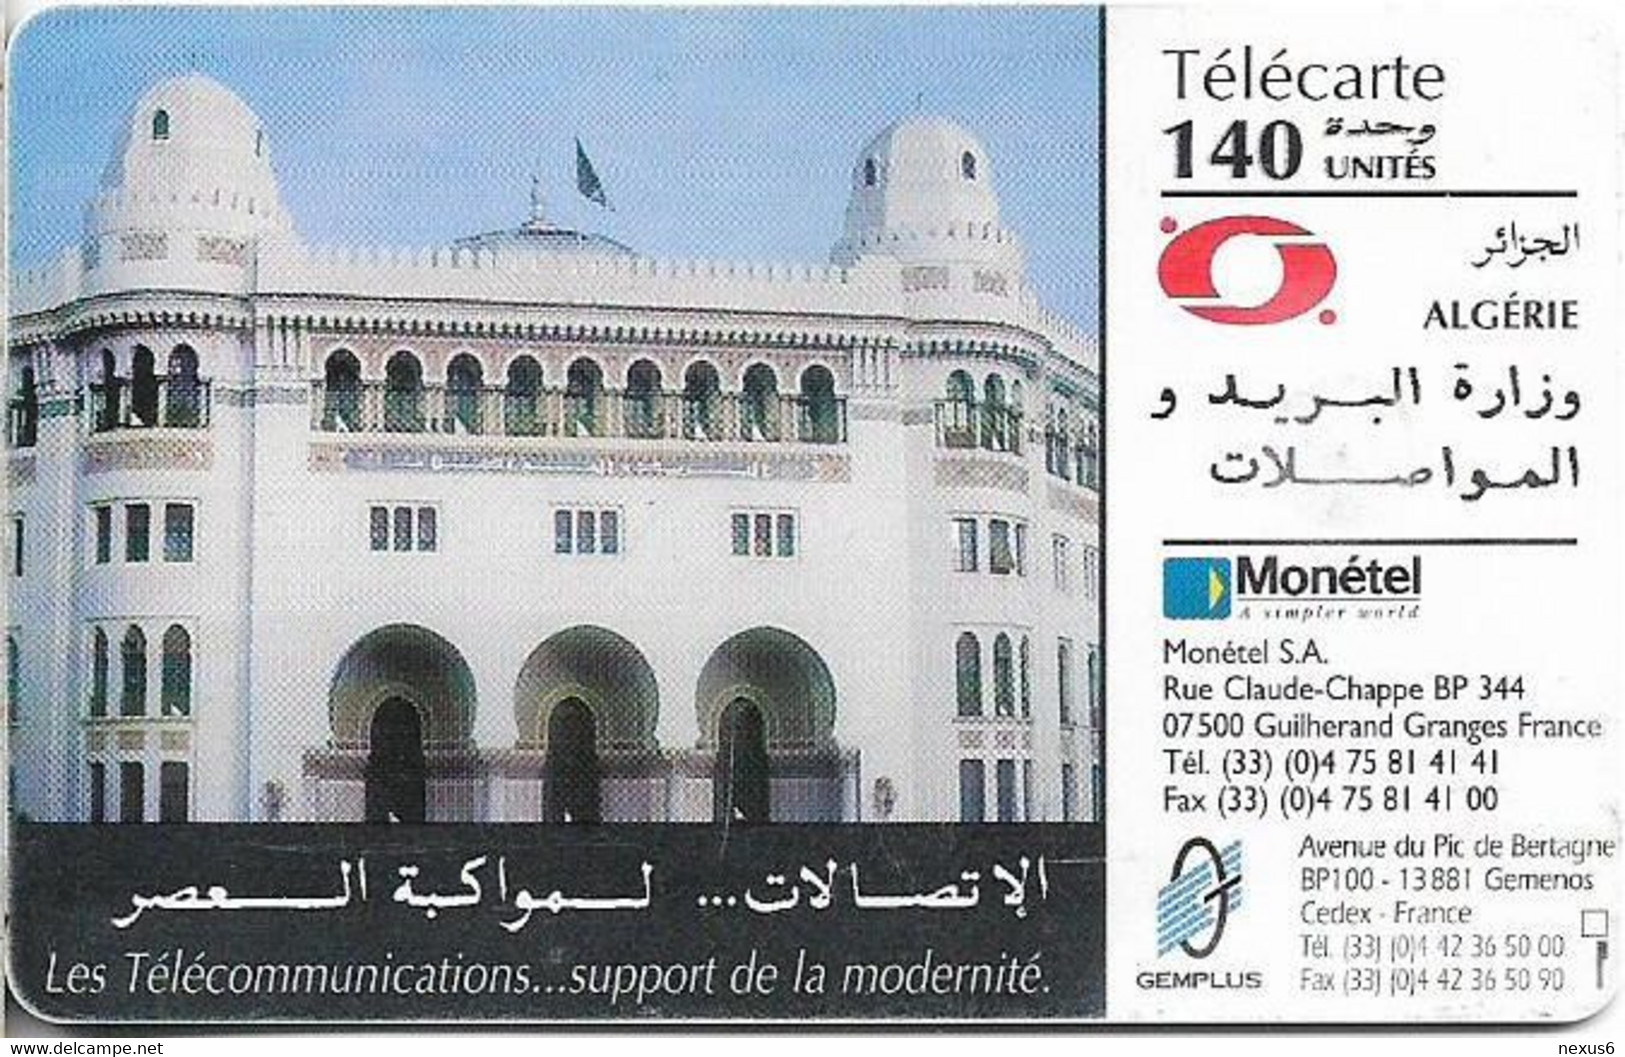 Algeria - PTT-Monetel - Central Post Office, Gem1B Not Symmetr. White/Gold, 1996, 140Units, Used - Argelia